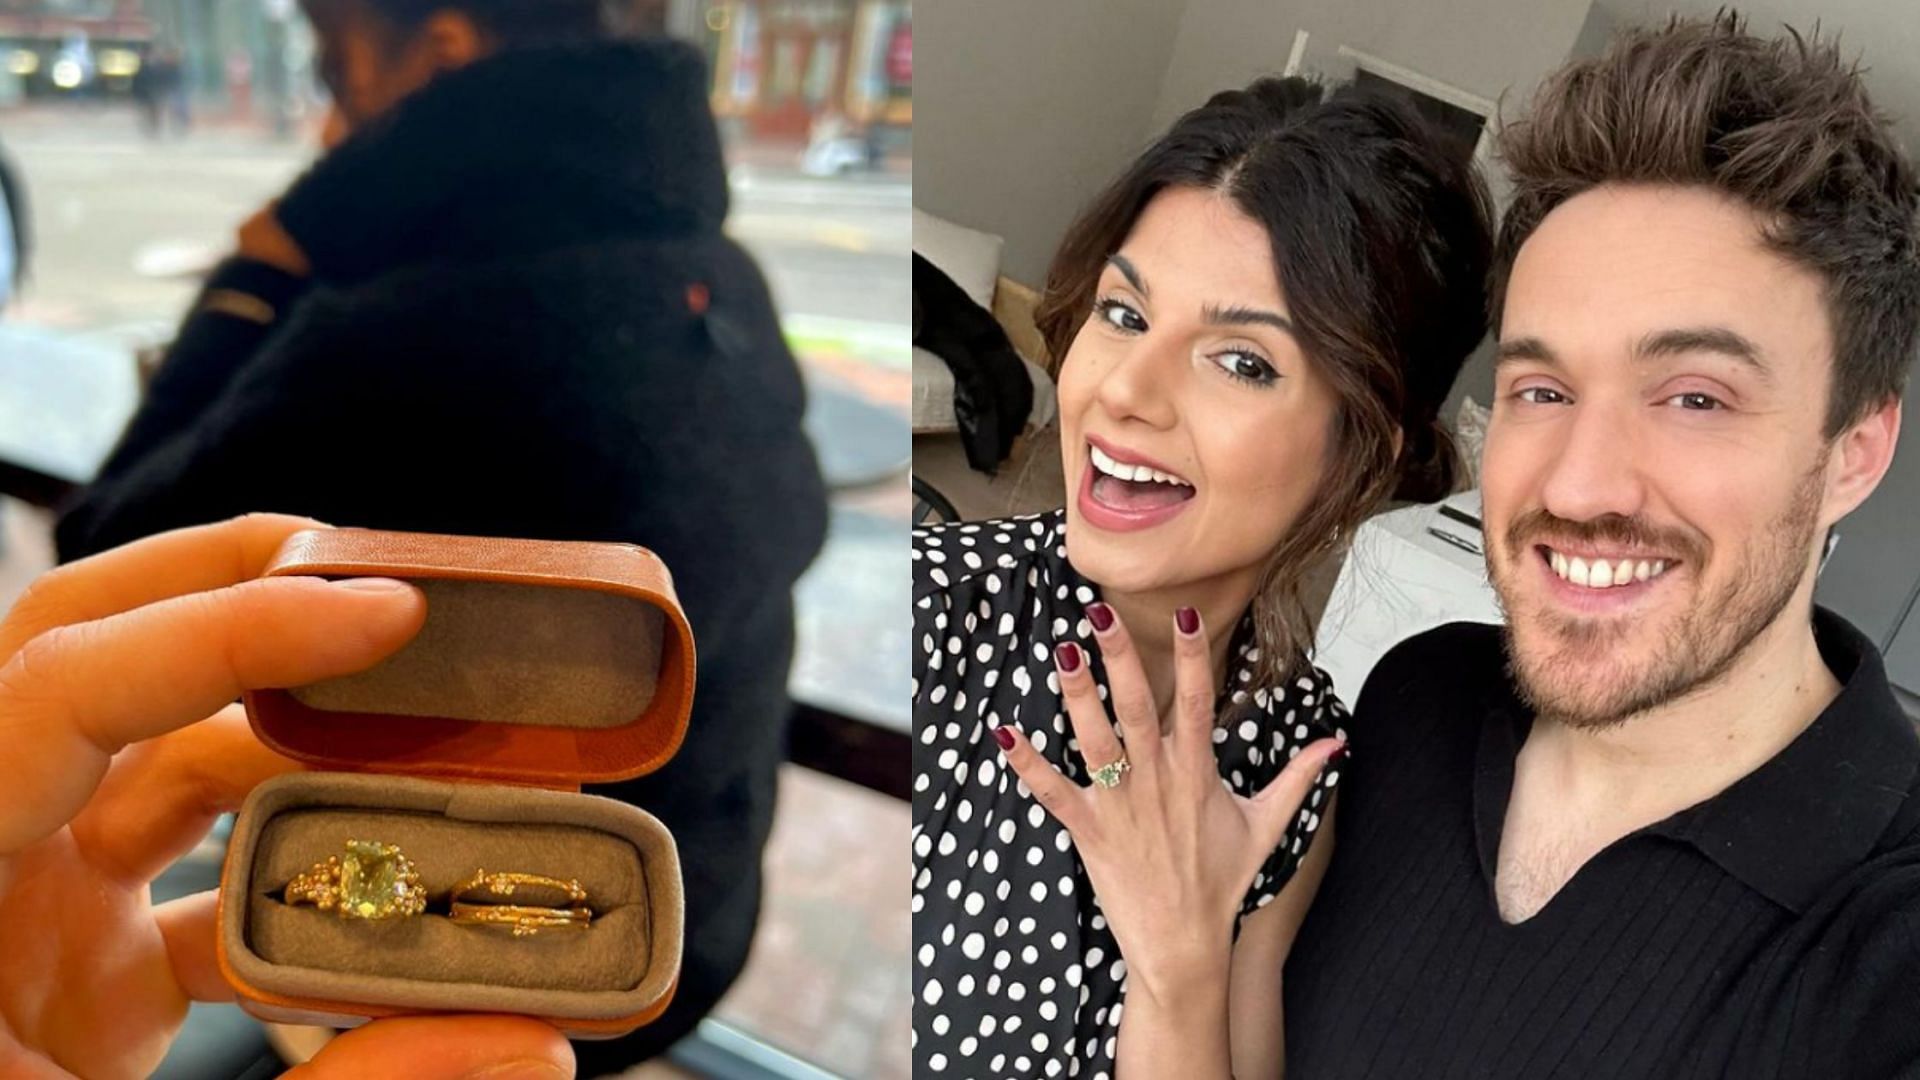 BBC presenter James Stewart got engaged with 2018 Bake Off finalist Ruby Bhogal (Image via Instagram/@rubybhogal)